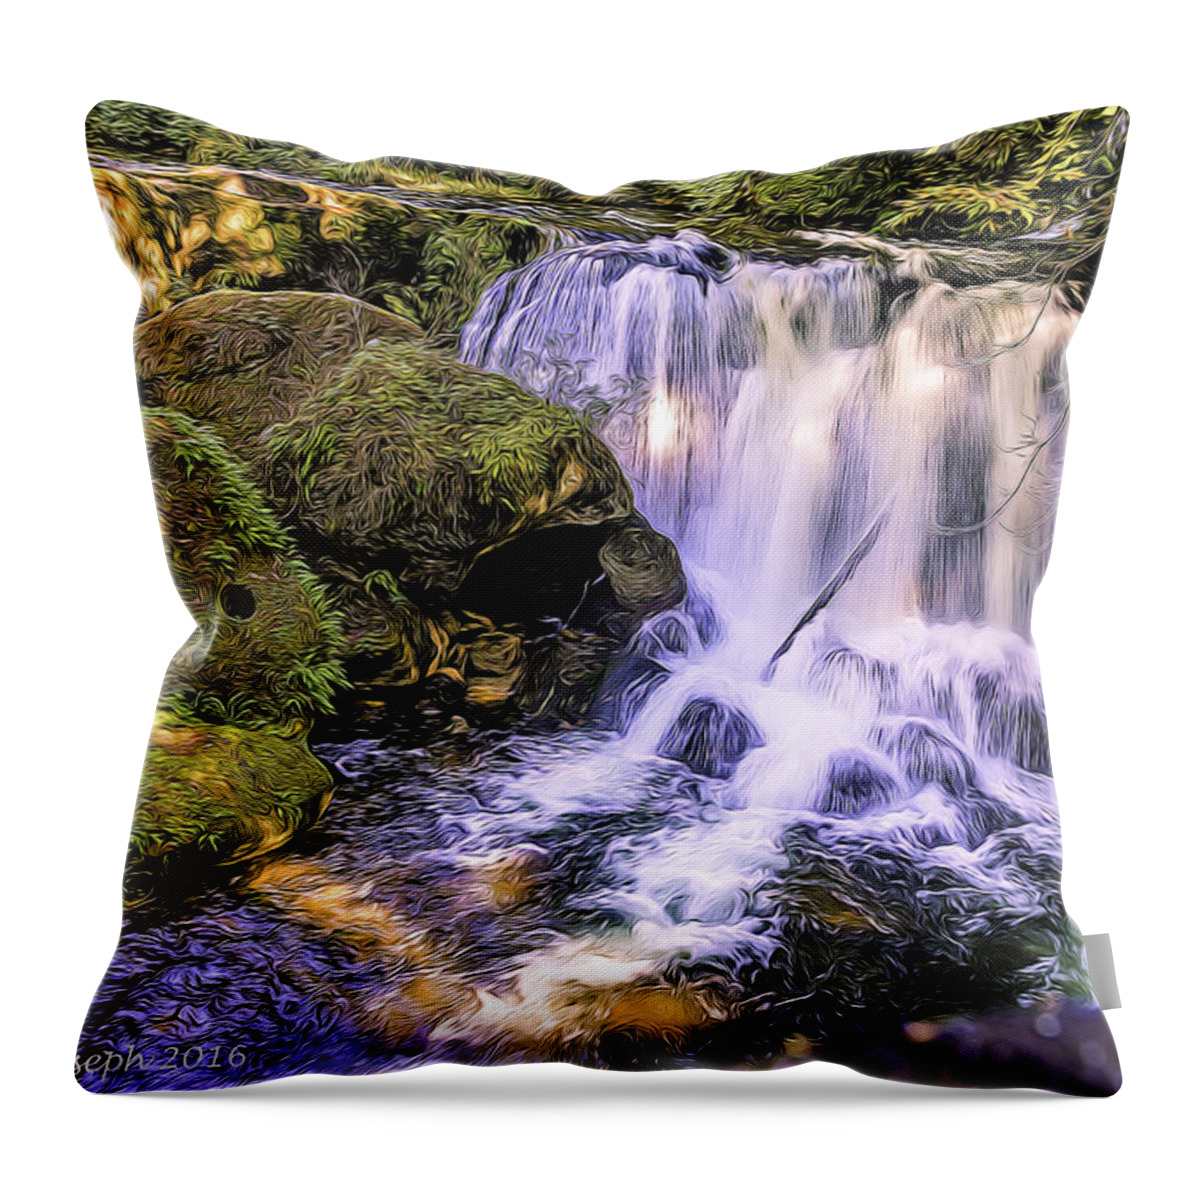 Waterfall Throw Pillow featuring the photograph Whatcom Falls II by Mark Joseph